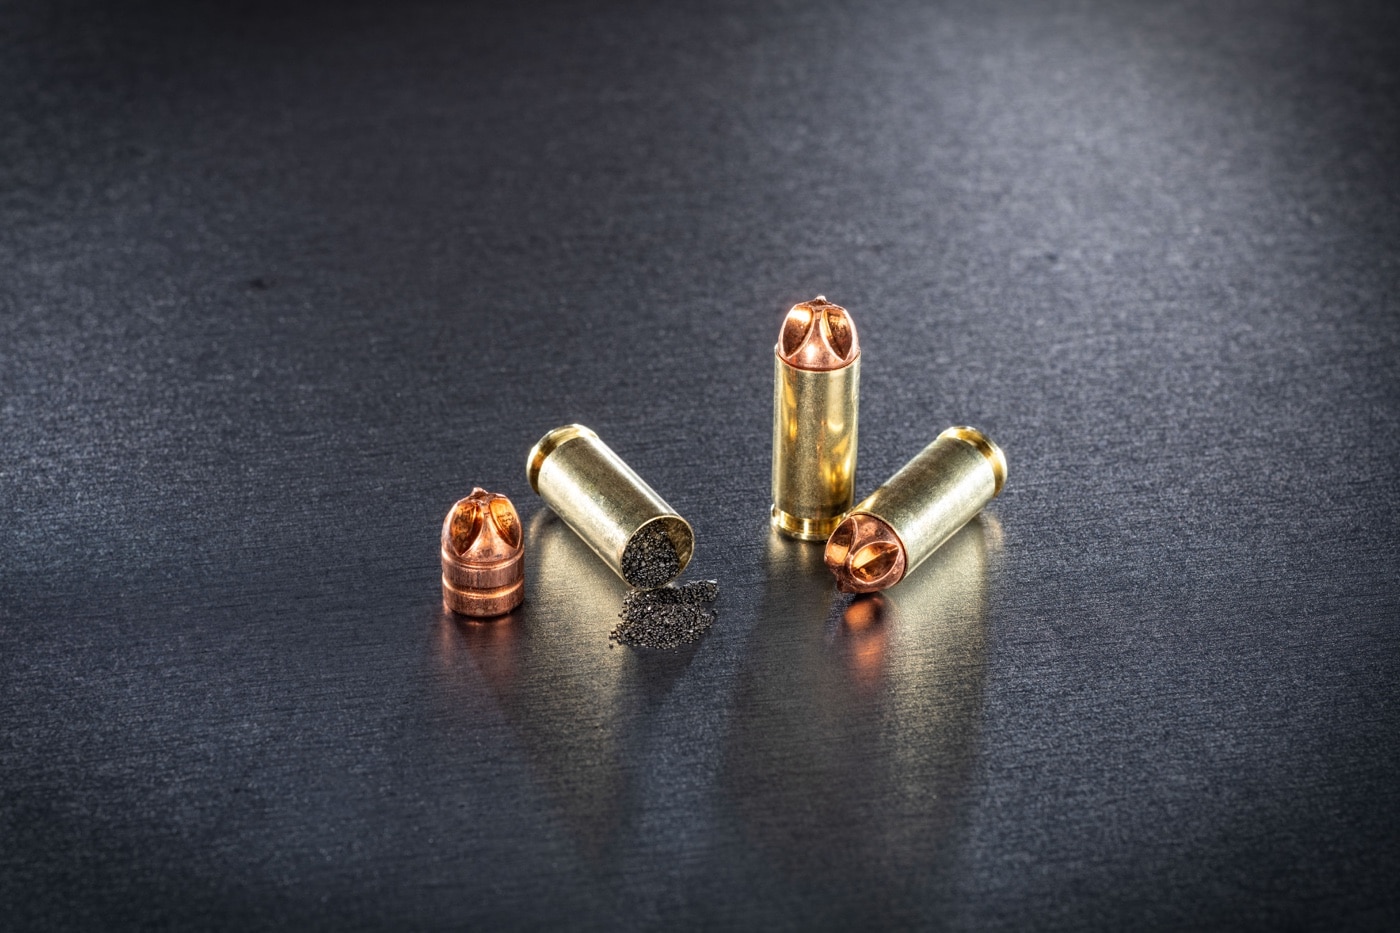 10mm honey badger ammo ammunition components disassembled photo diagram